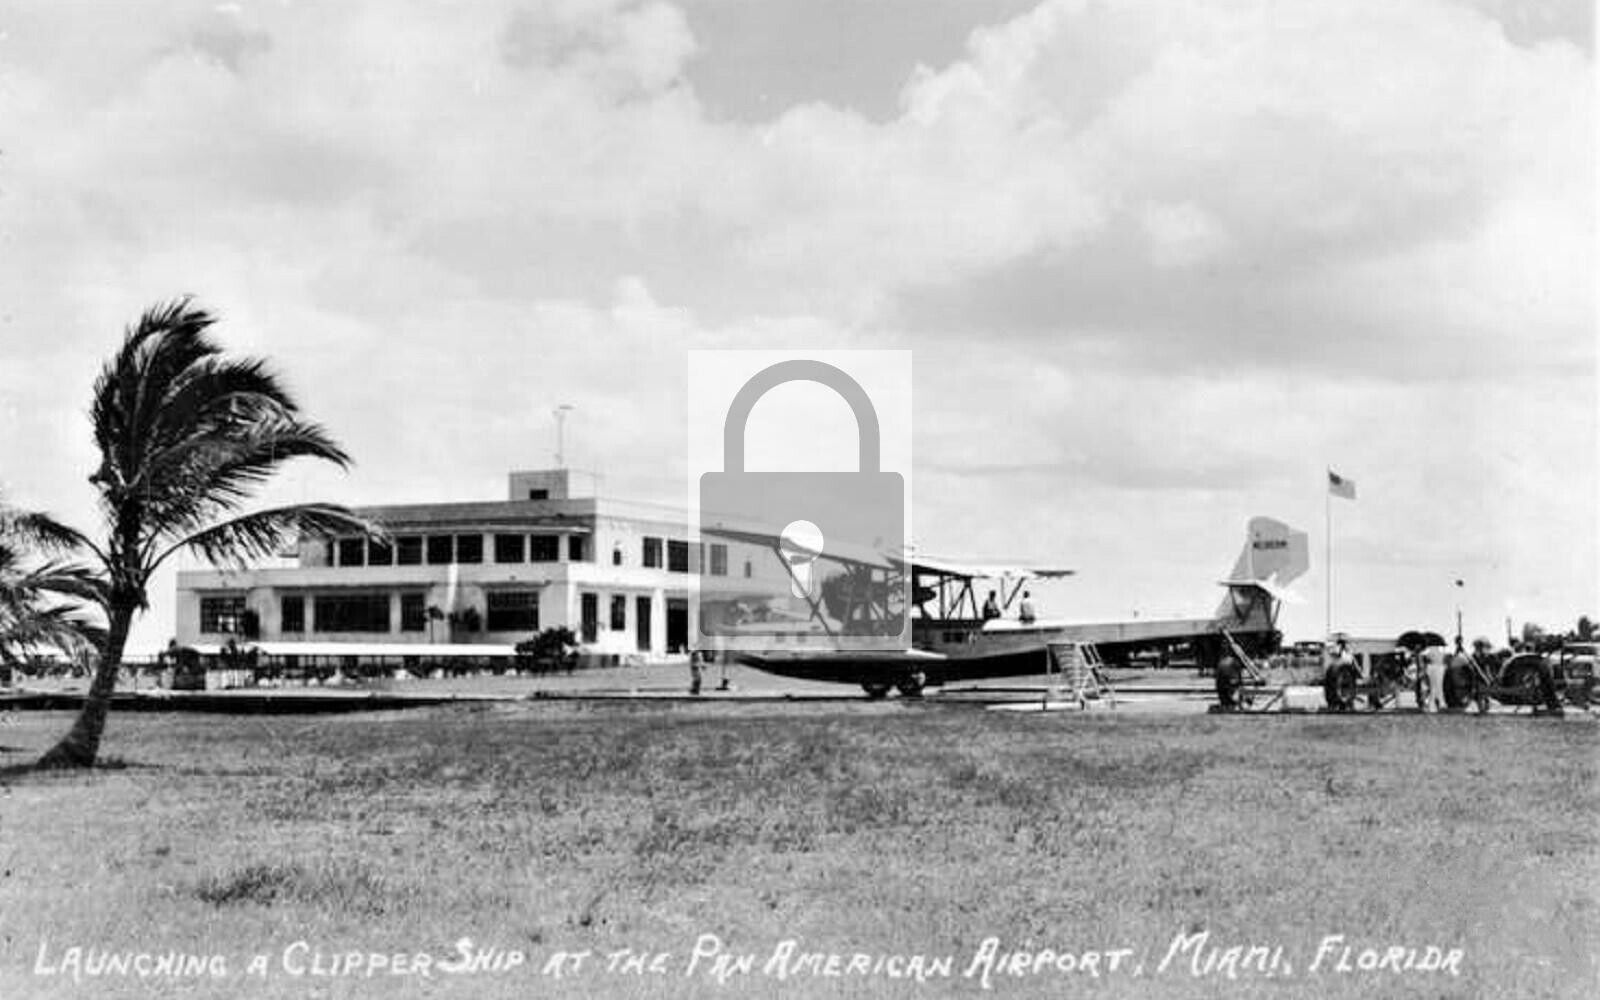 Launching Clipper Ship Pan American Airport Miami Florida FL Reprint Postcard